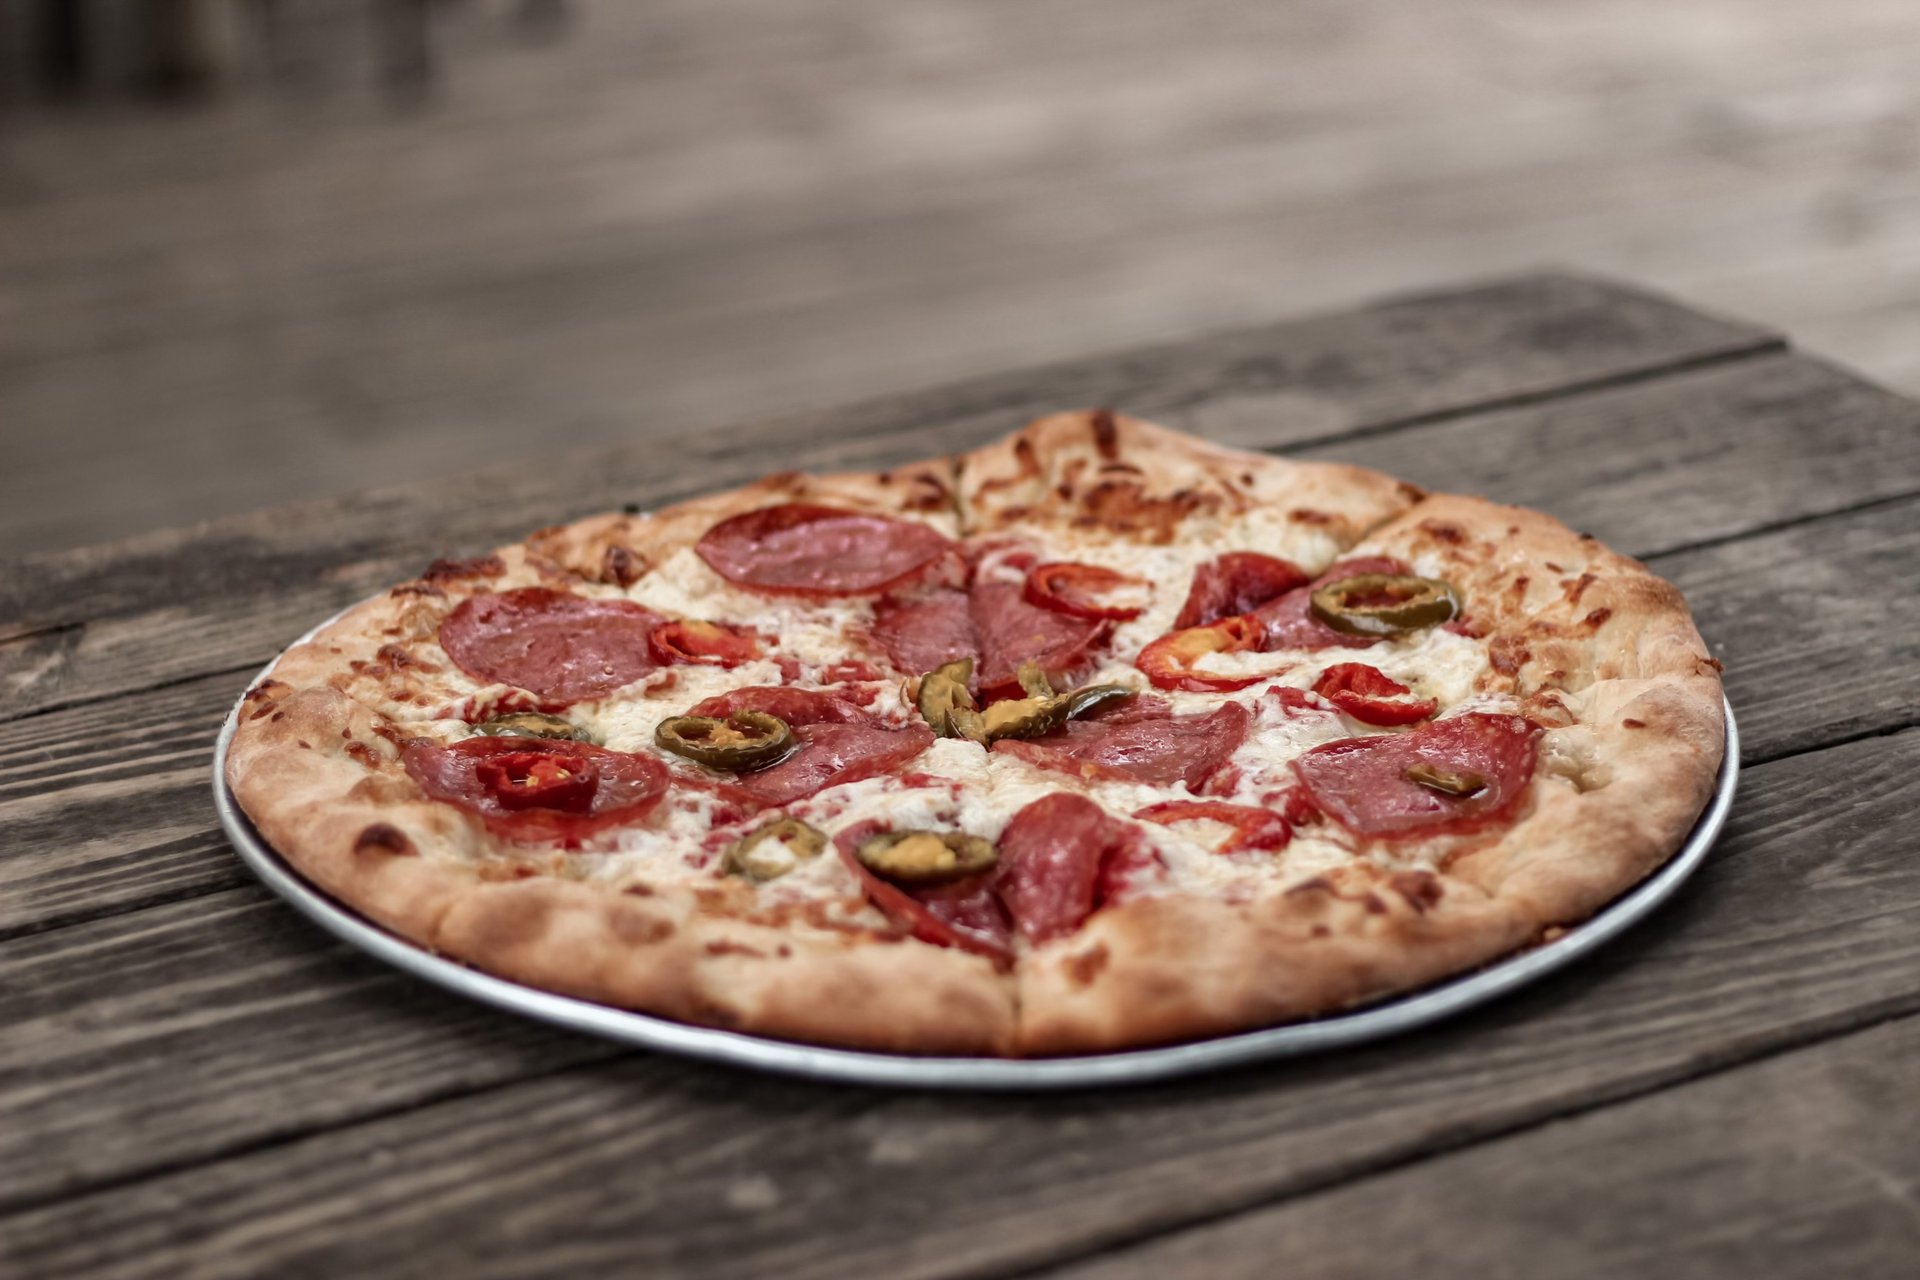 Papa John's Pizza - Home - Costa Mesa, California - Menu, prices,  restaurant reviews